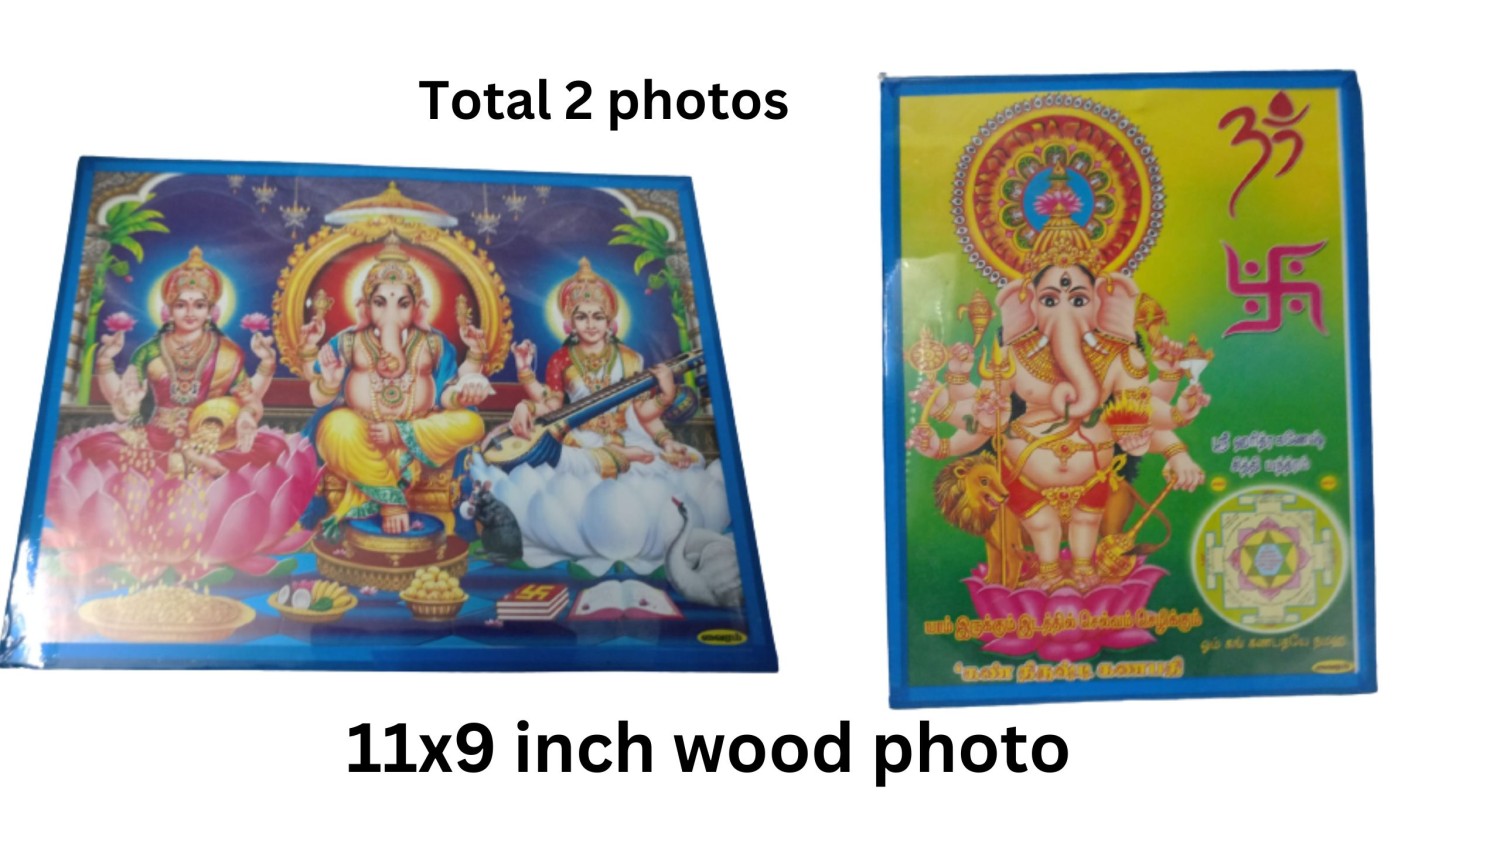 Photo 1,Lakshmi Devi Ganesha Saraswati 2, God Sri Subha Nazar Drishti Ganapathi Photo Frame for Entrance with wall hanging wood photo (11x9 Inch) Total  2 photos